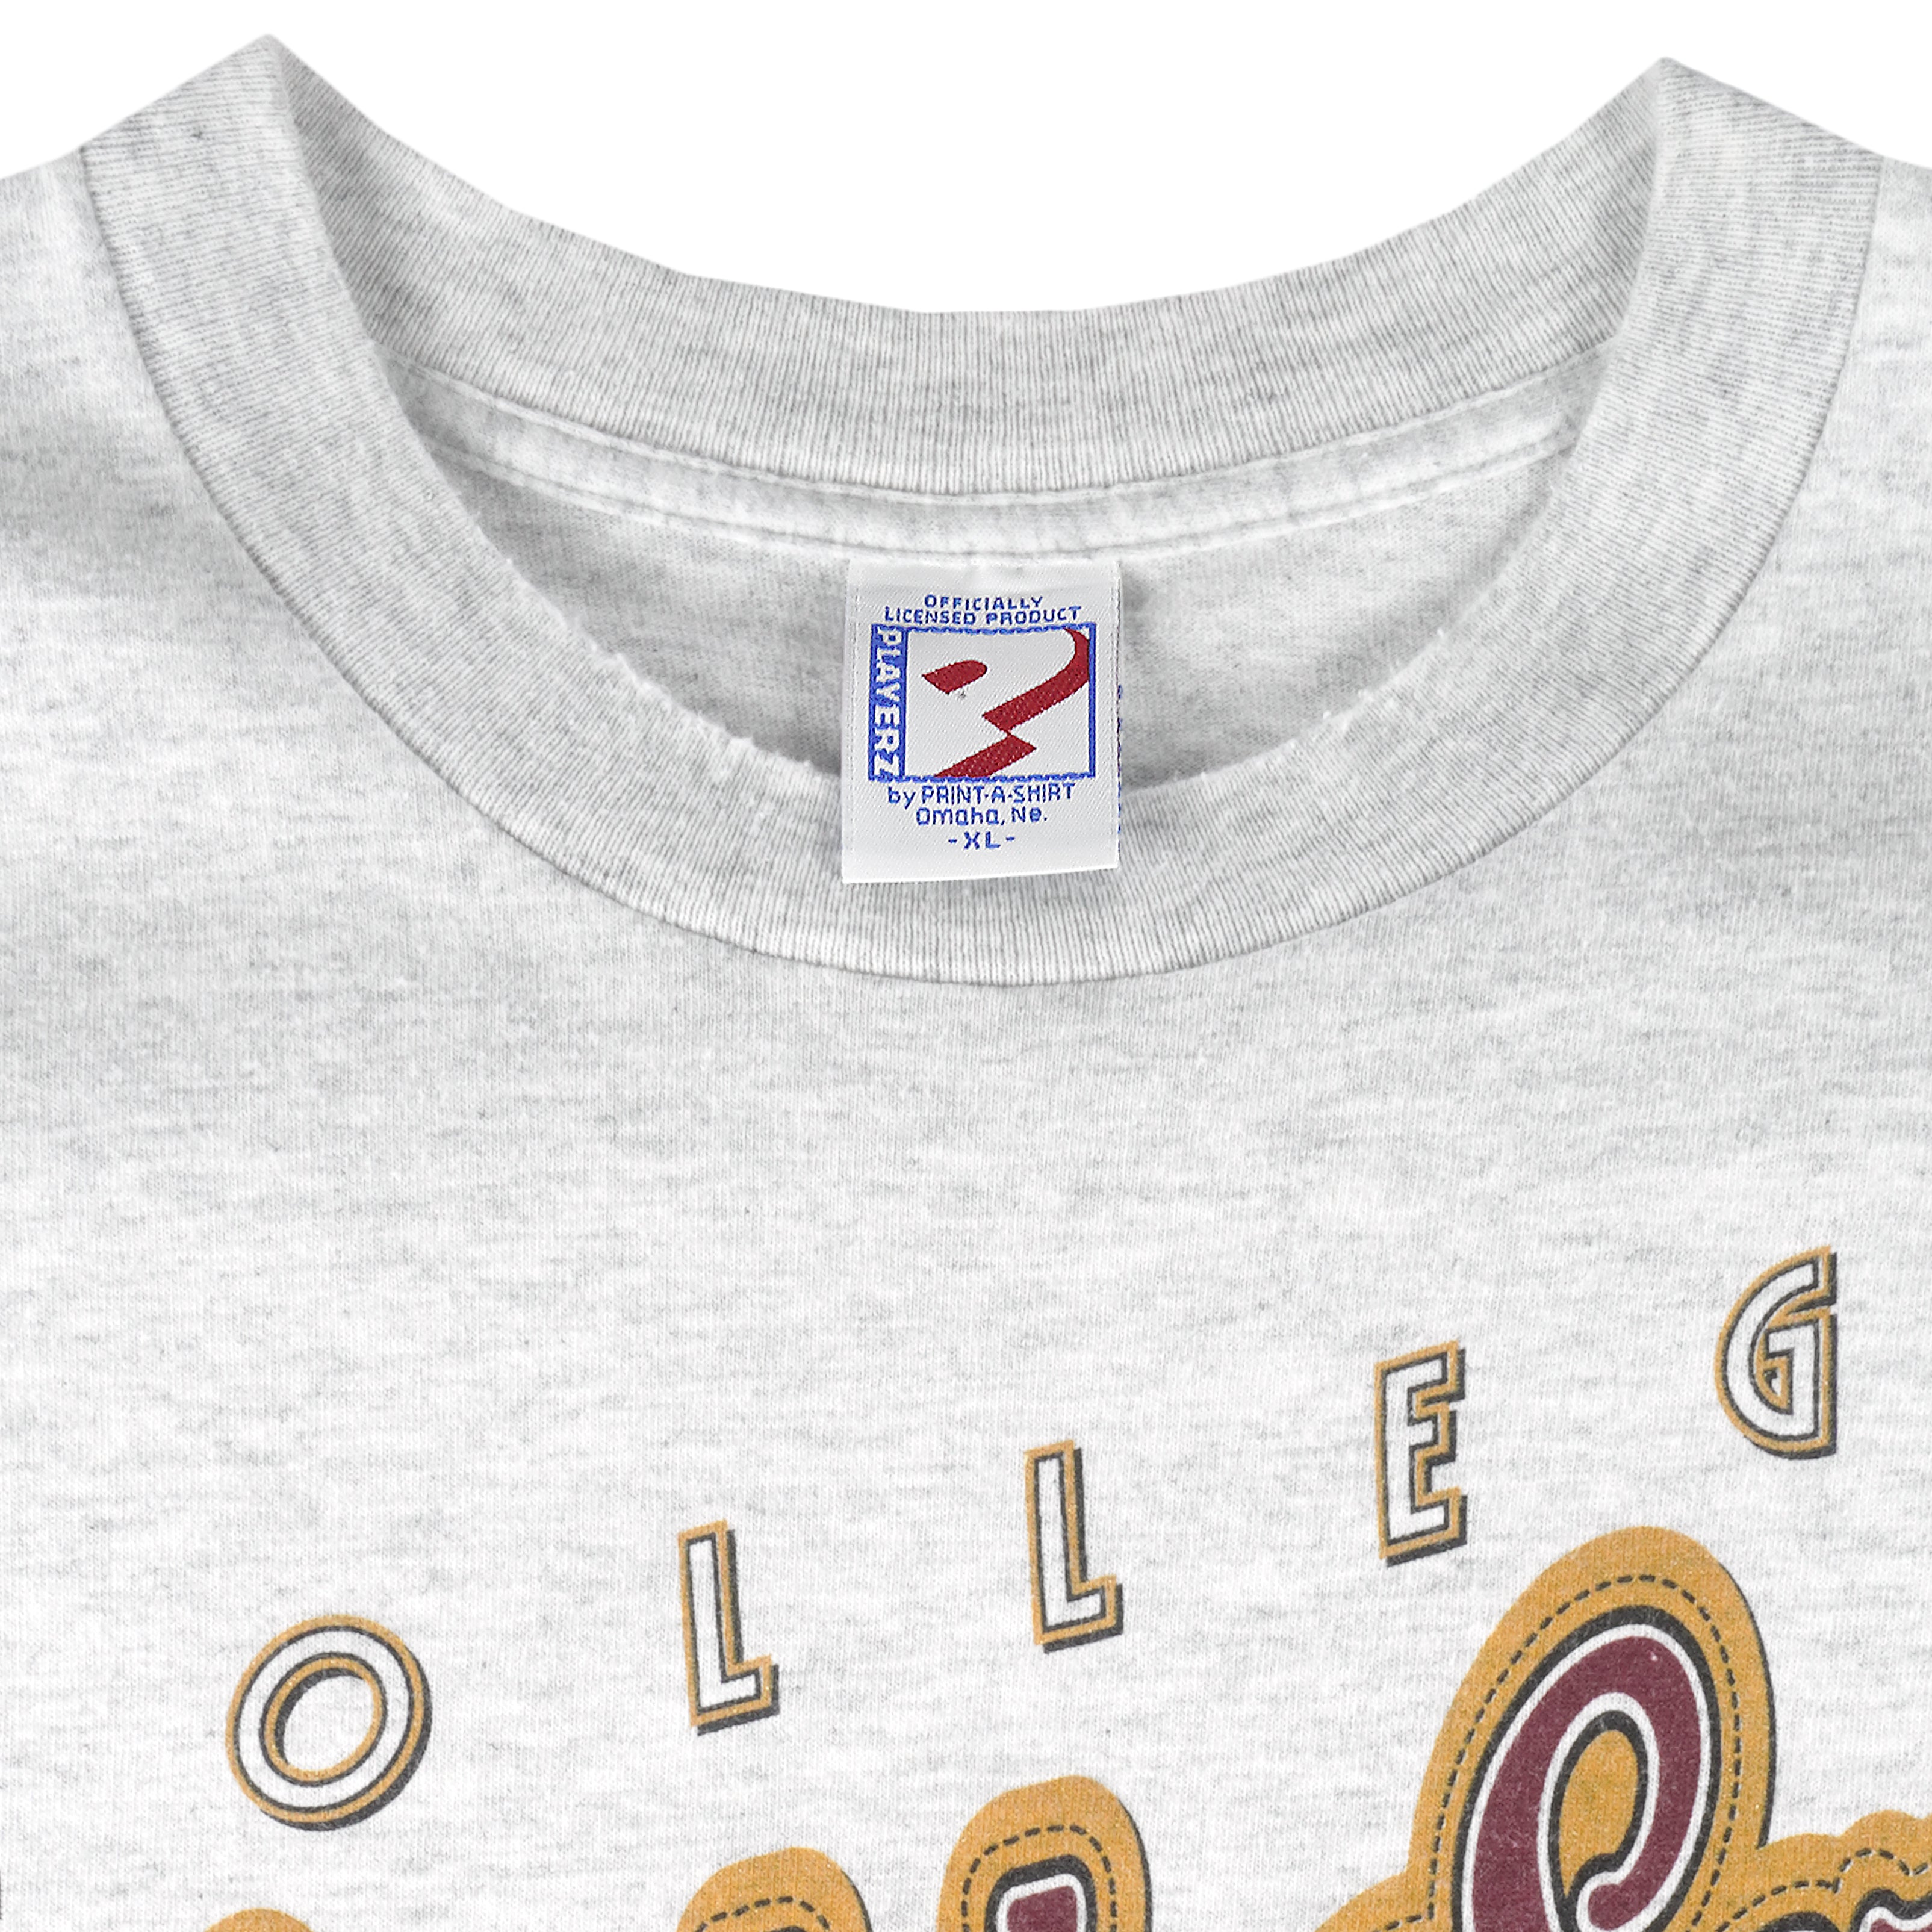 Vtg 1996 MLB Kansas City Royals Spell Out Printed T-shirt 